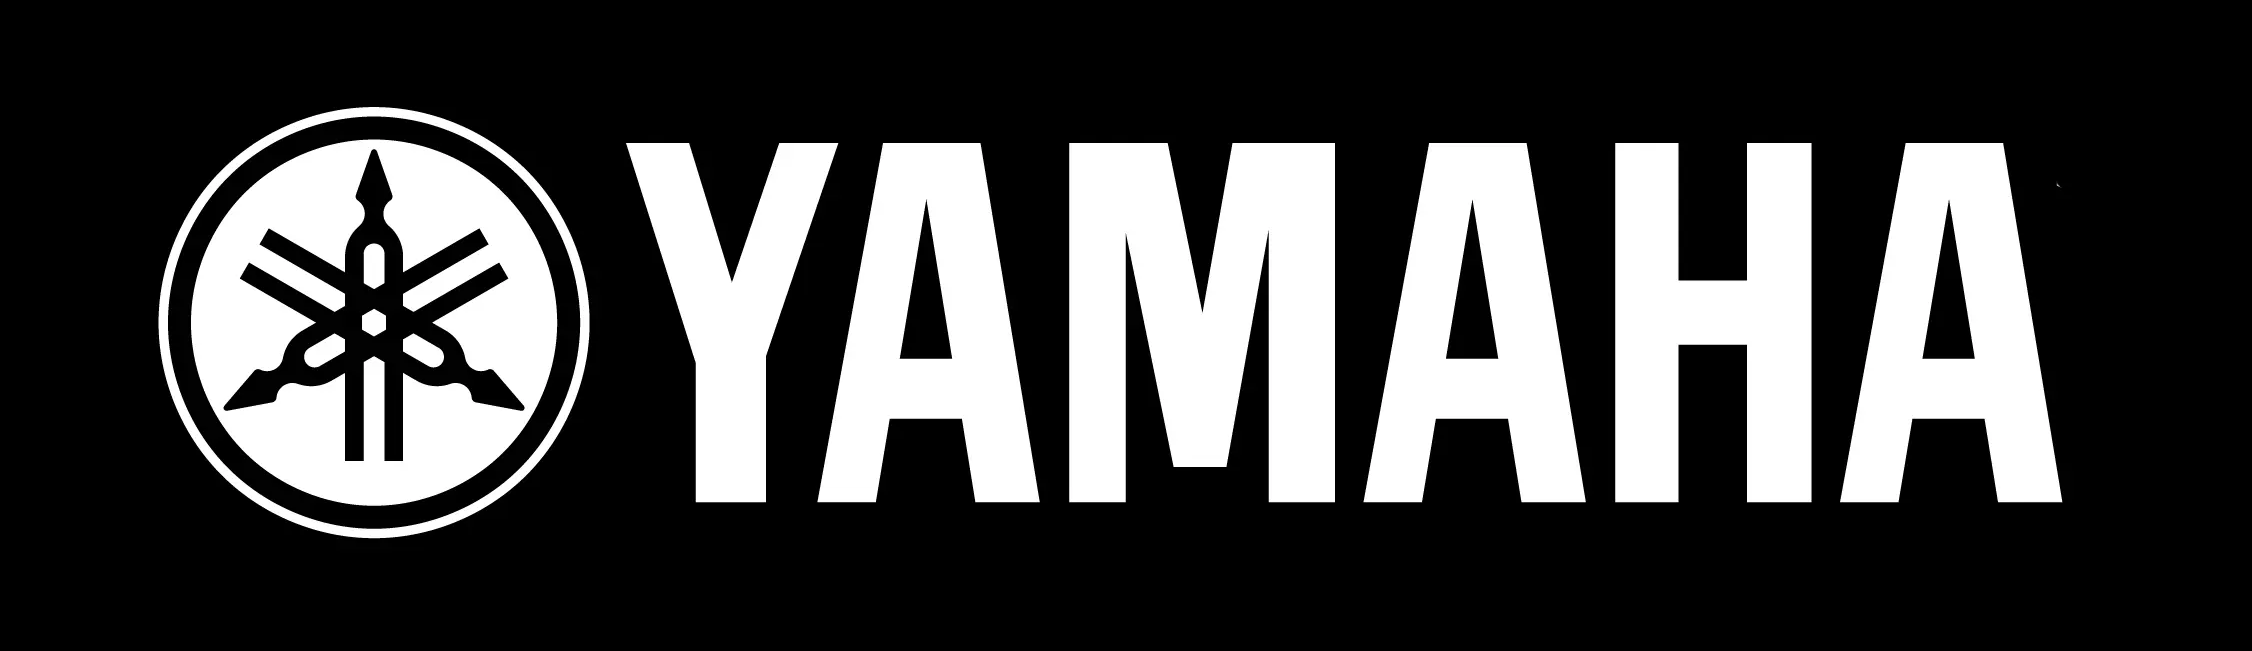 Yamaha-logoblack